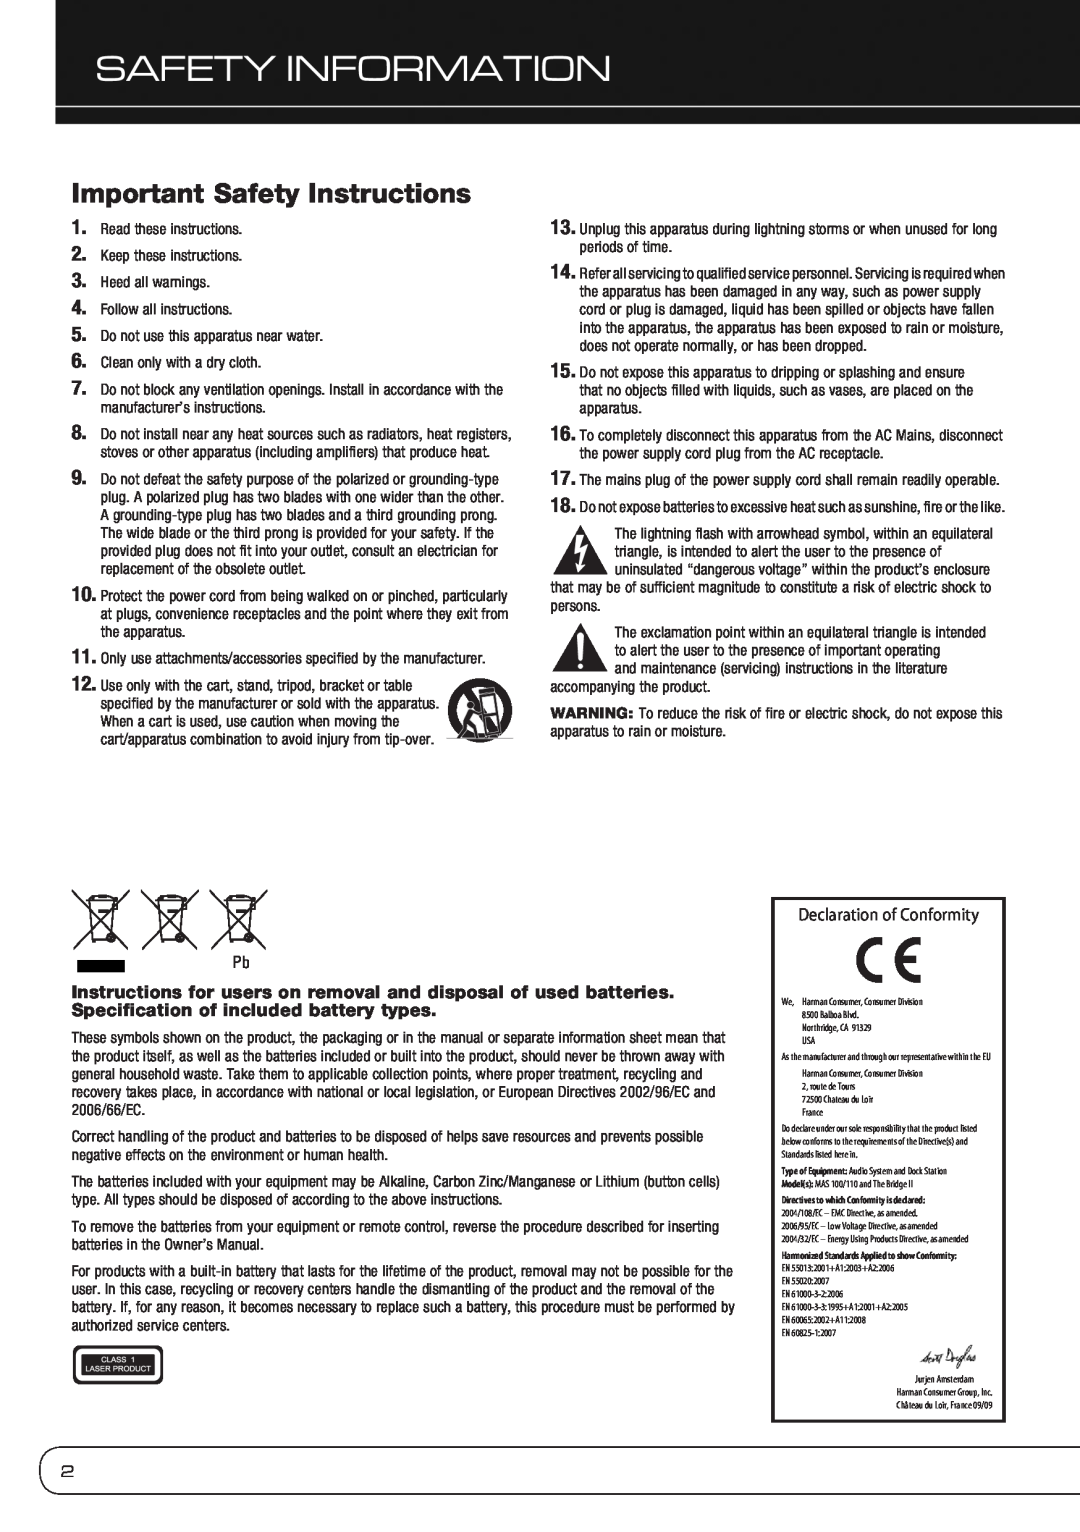 Harman-Kardon MAS 100, MAS 110 owner manual Safety Information, Important Safety Instructions 